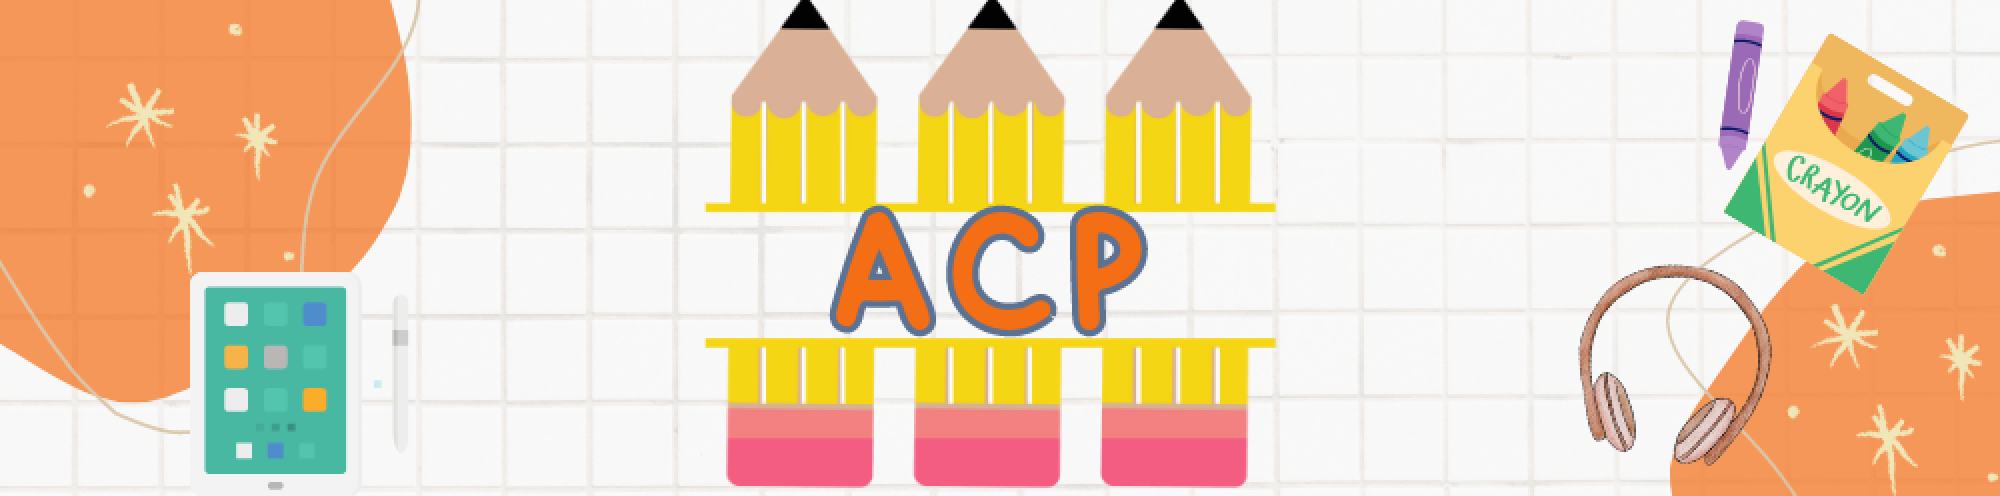 ACP Banner